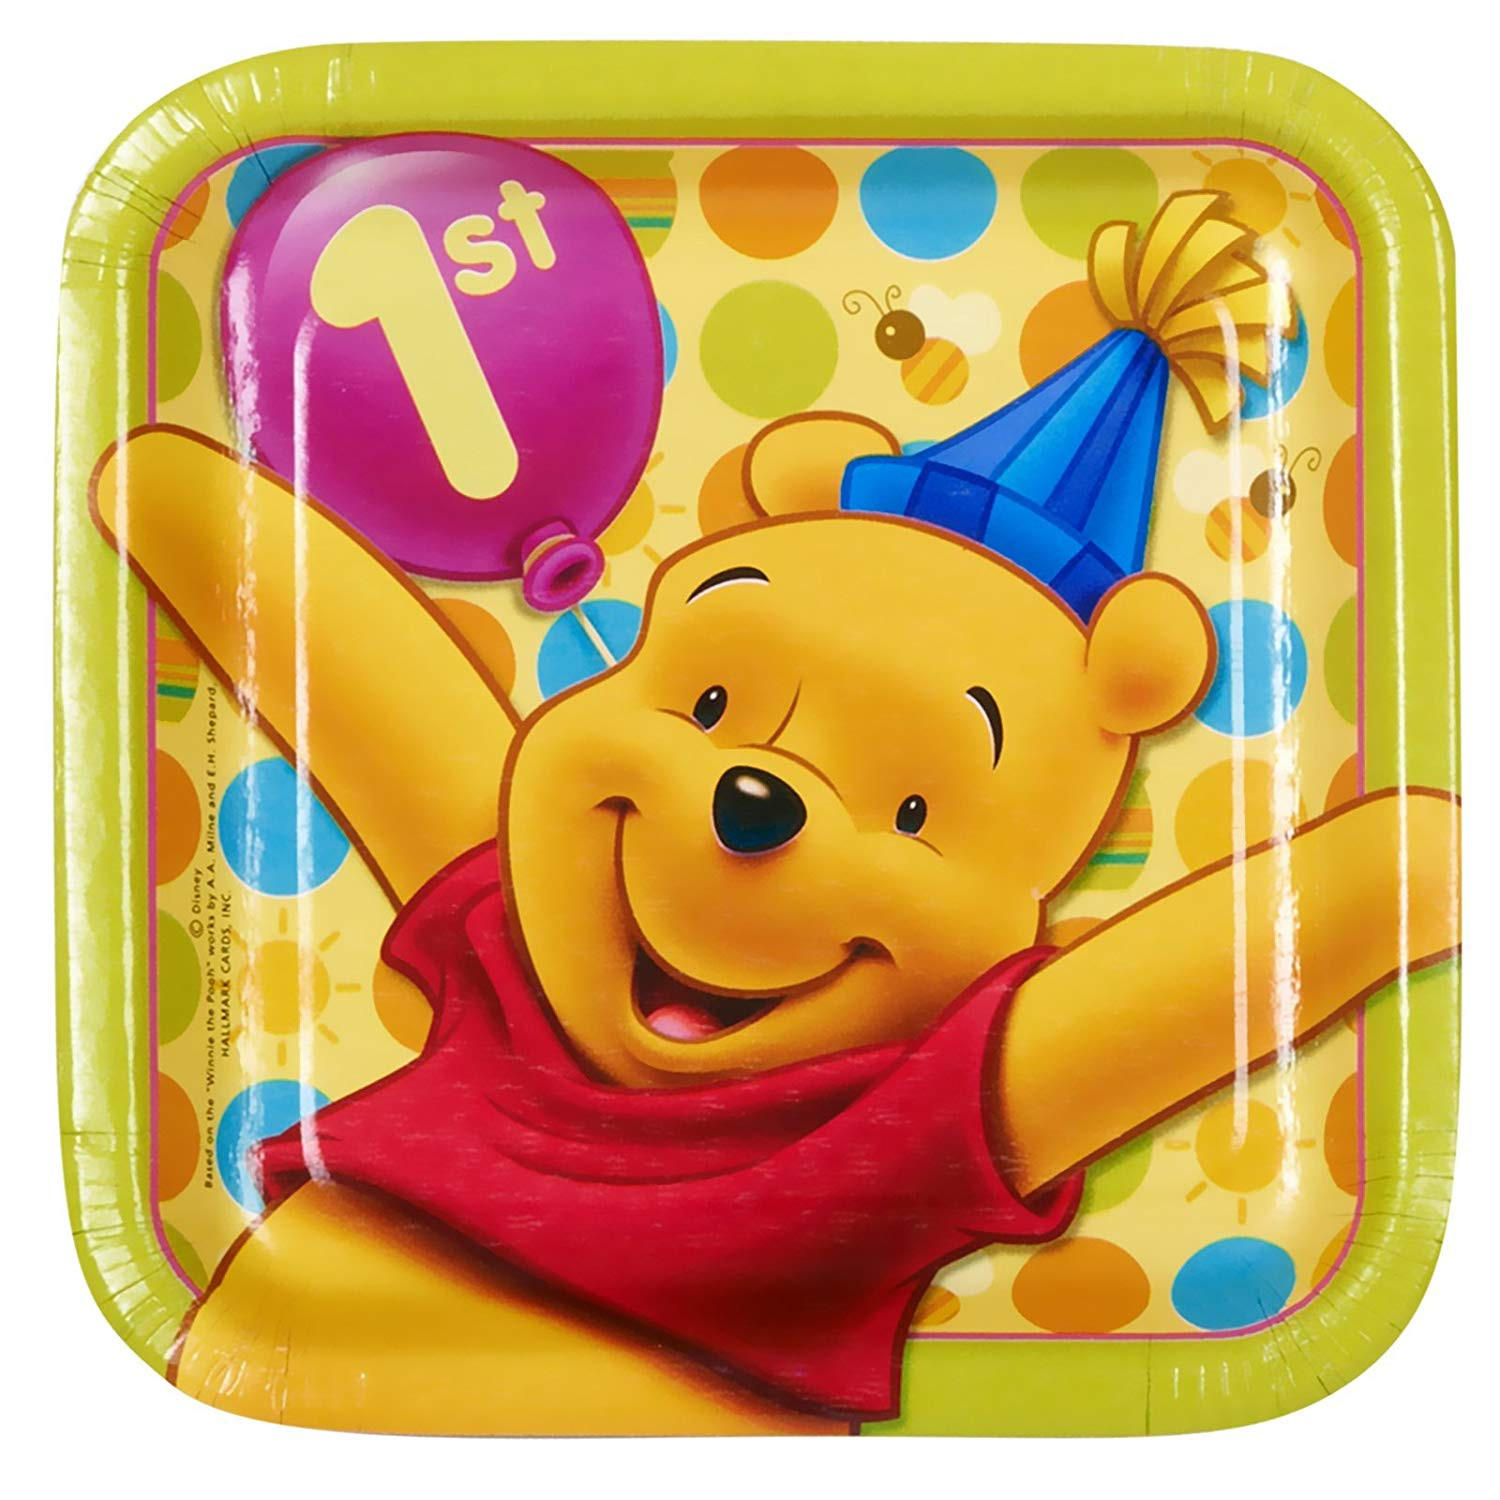 Winnie The Pooh 1st Birthday Decorations
 Winnie the Pooh Boys First Birthday Party Supplies